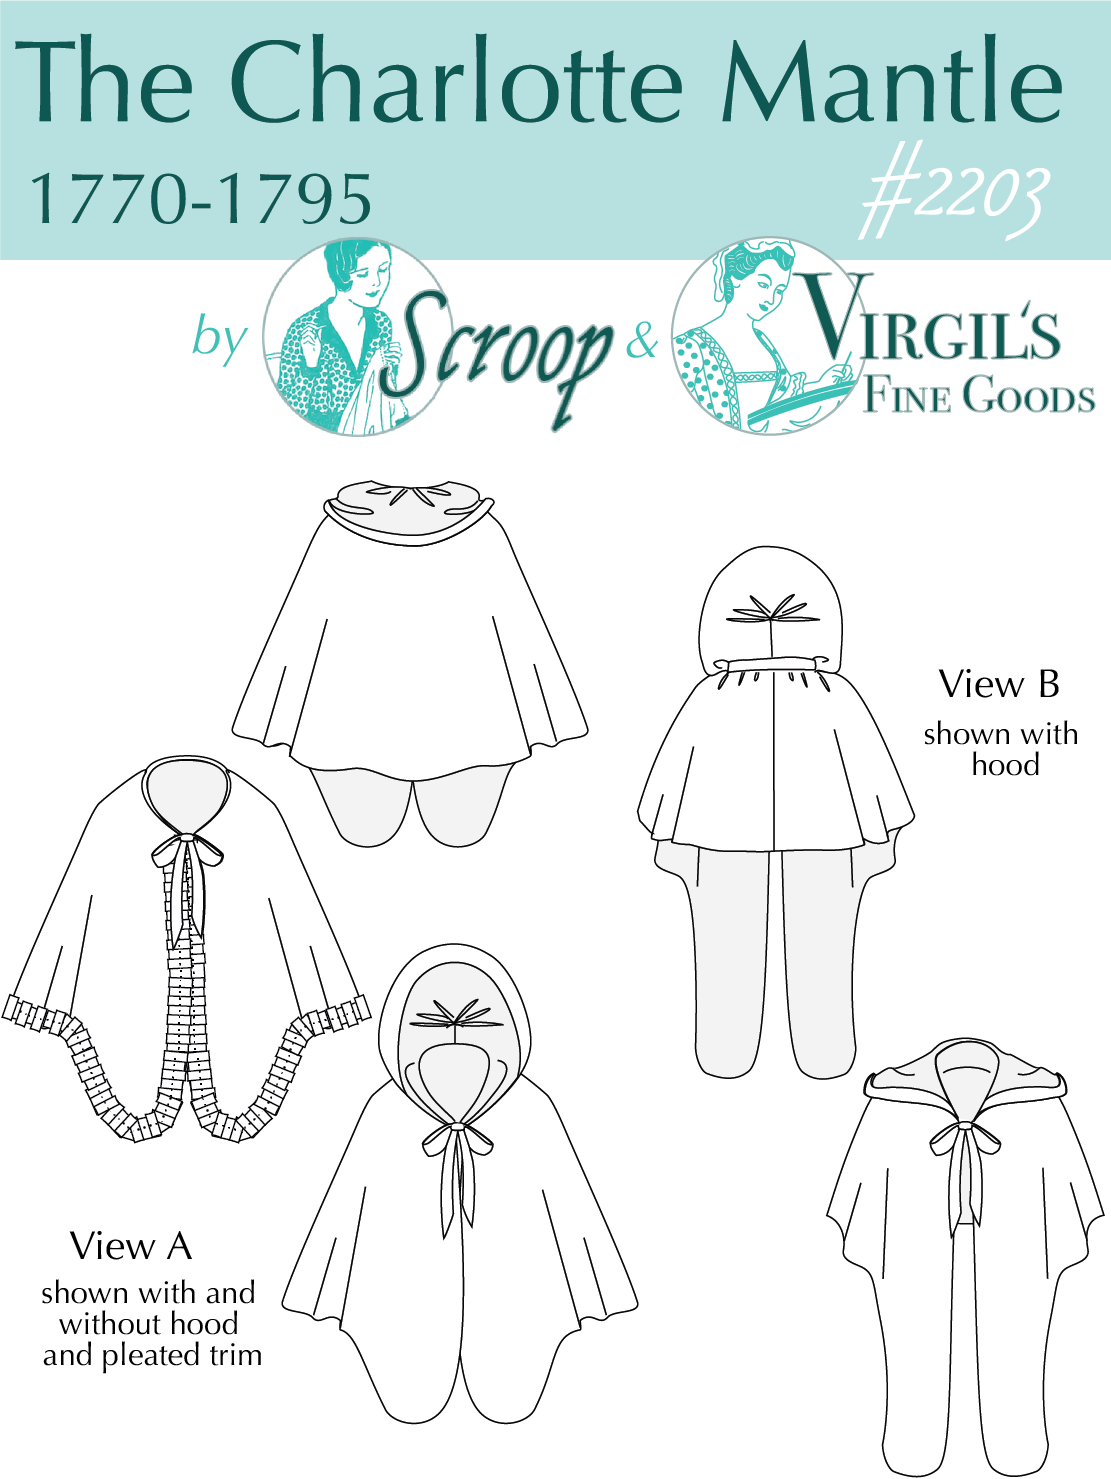 Scroop + Virgils Fine Goods 18th C Mantle Patterns scrooppatterns.com